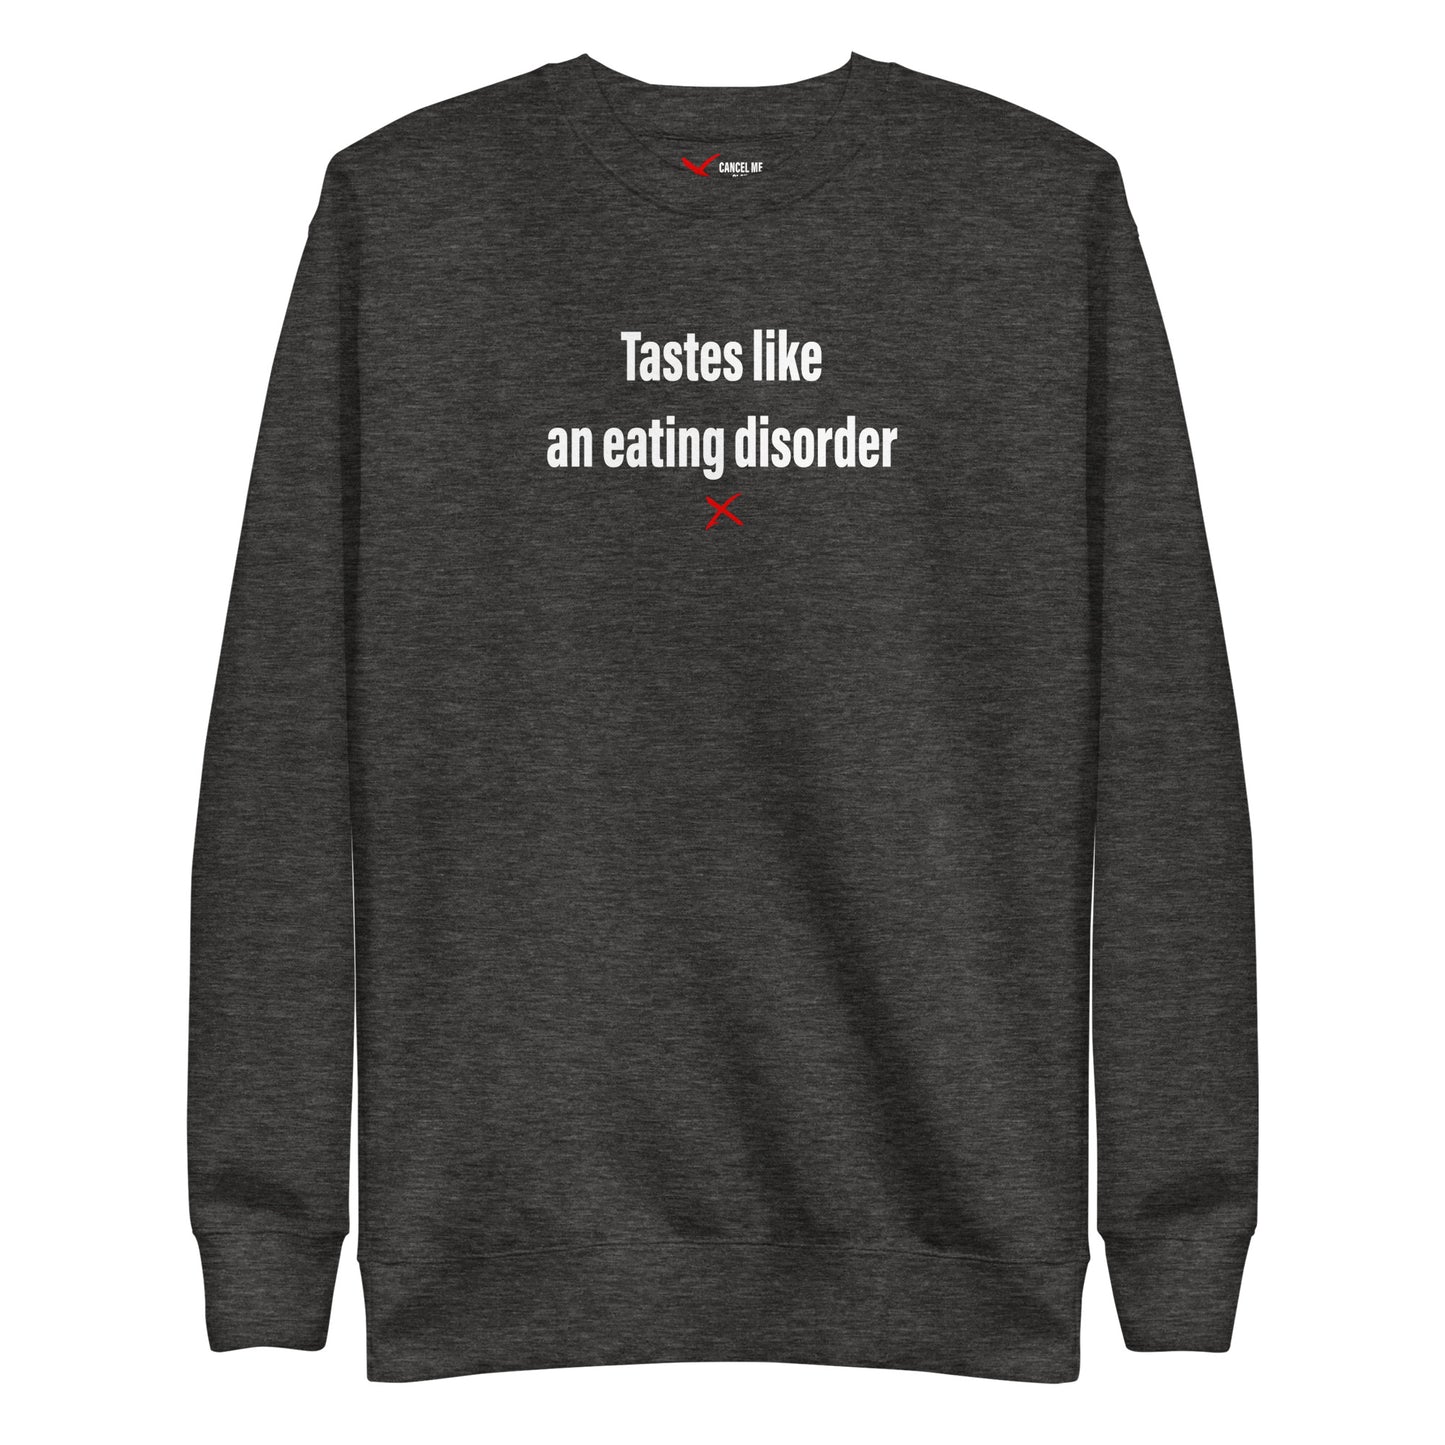 Tastes like an eating disorder - Sweatshirt